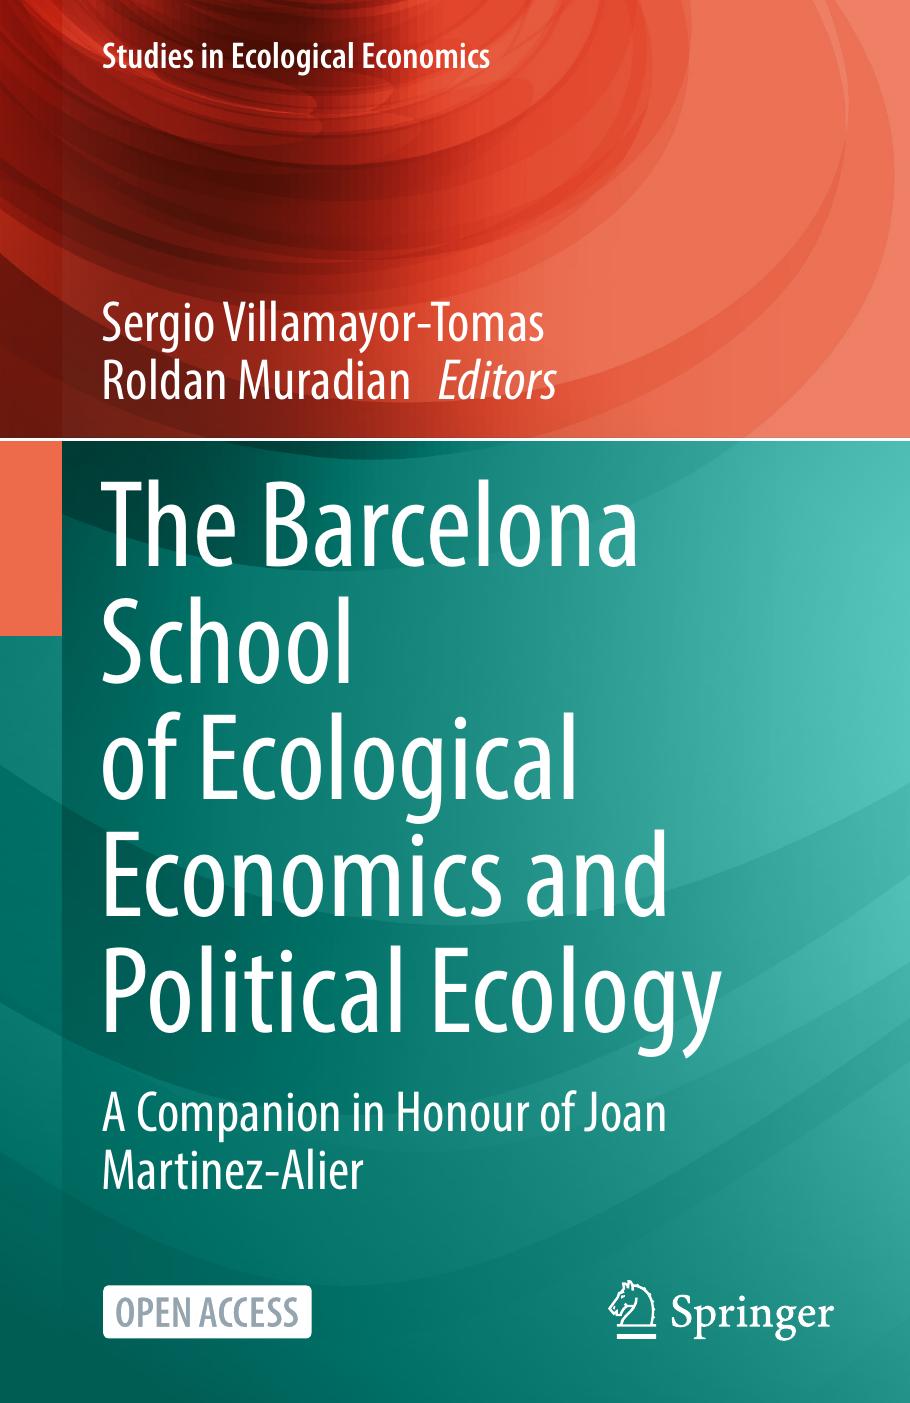 The Barcelona School of Ecological Economics and Political Ecology by sergio Villamayor-Tomas roldan Muradian